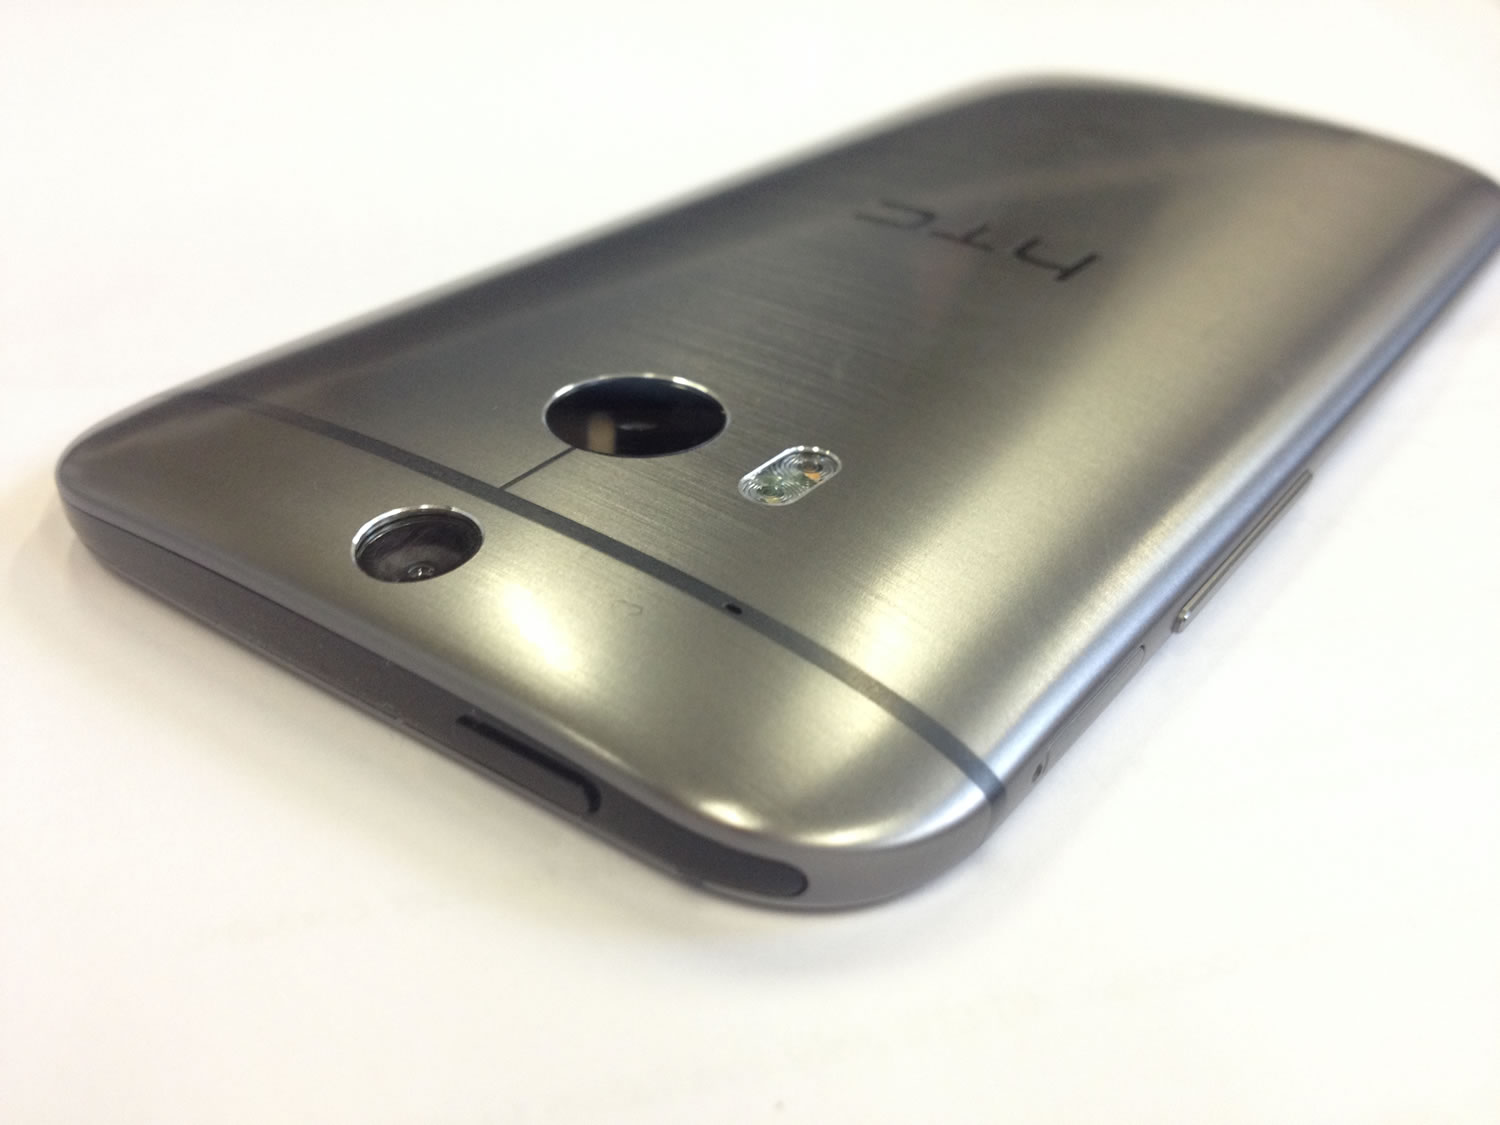 HTC One M8 Photo 2